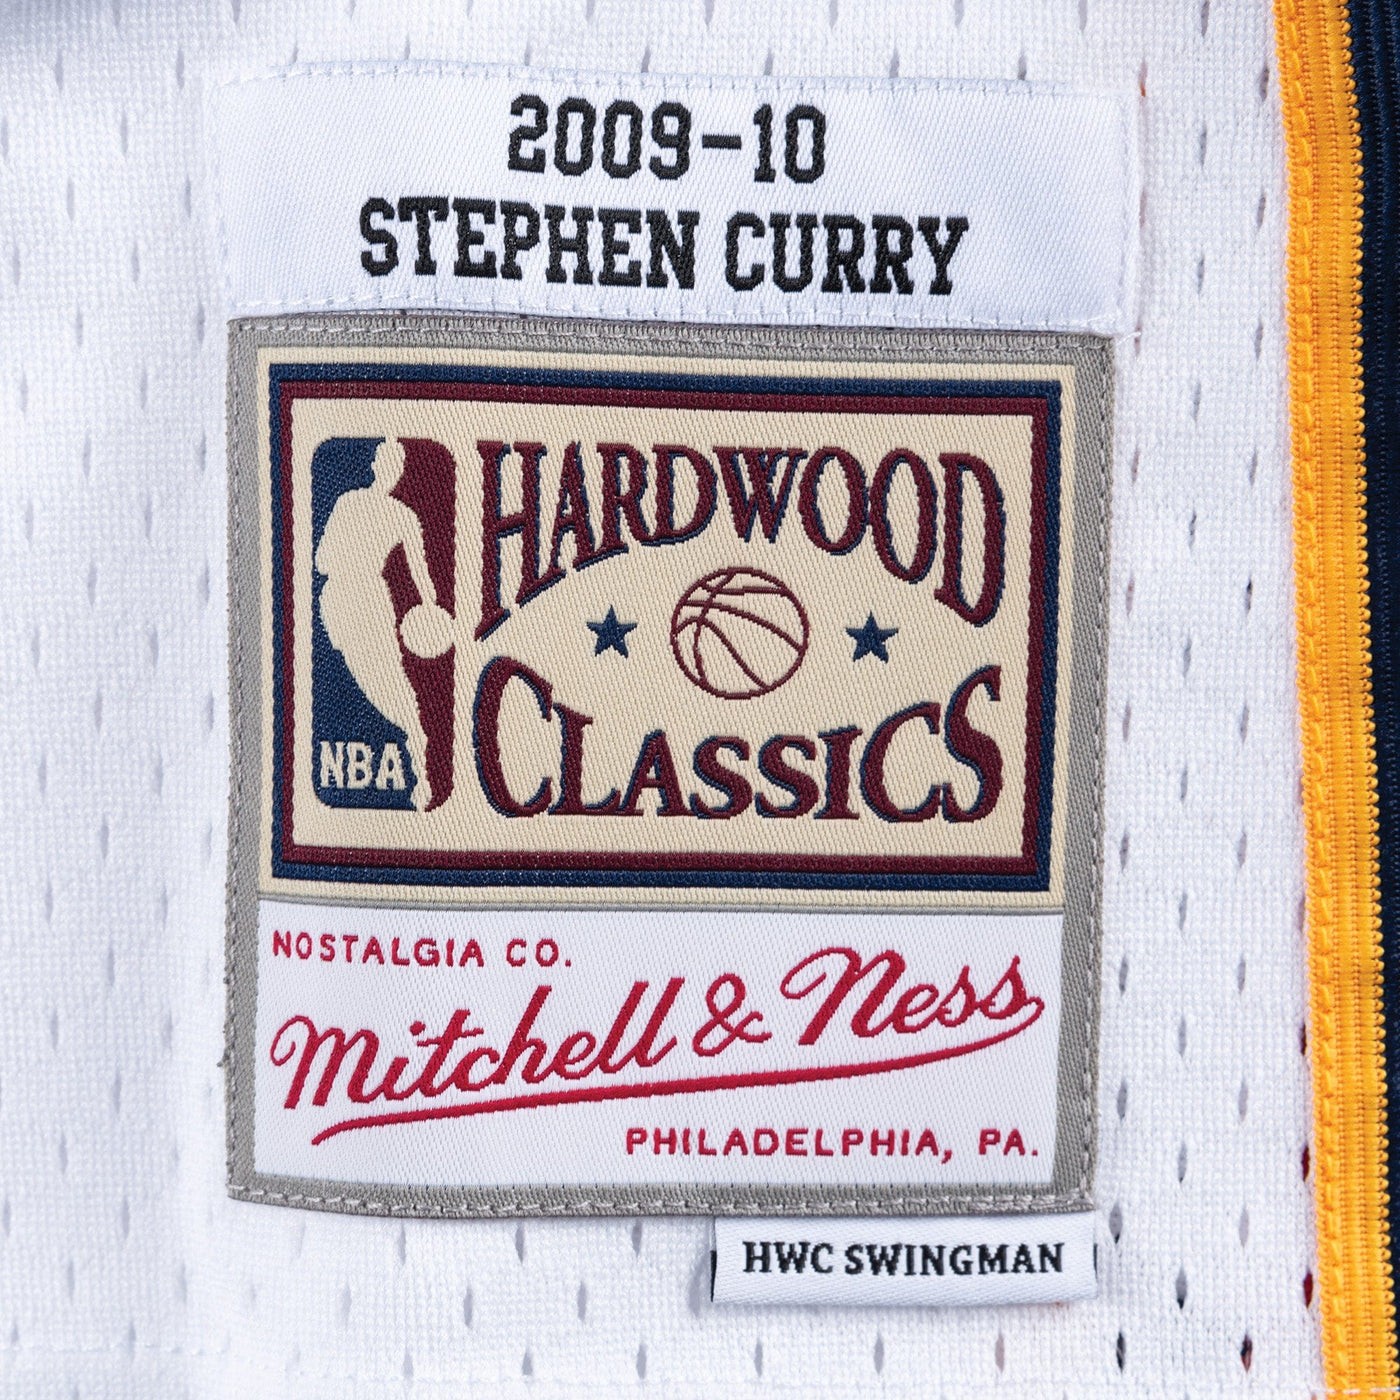 Swingman Jersey Steph Curry 09 Golden State Warriors